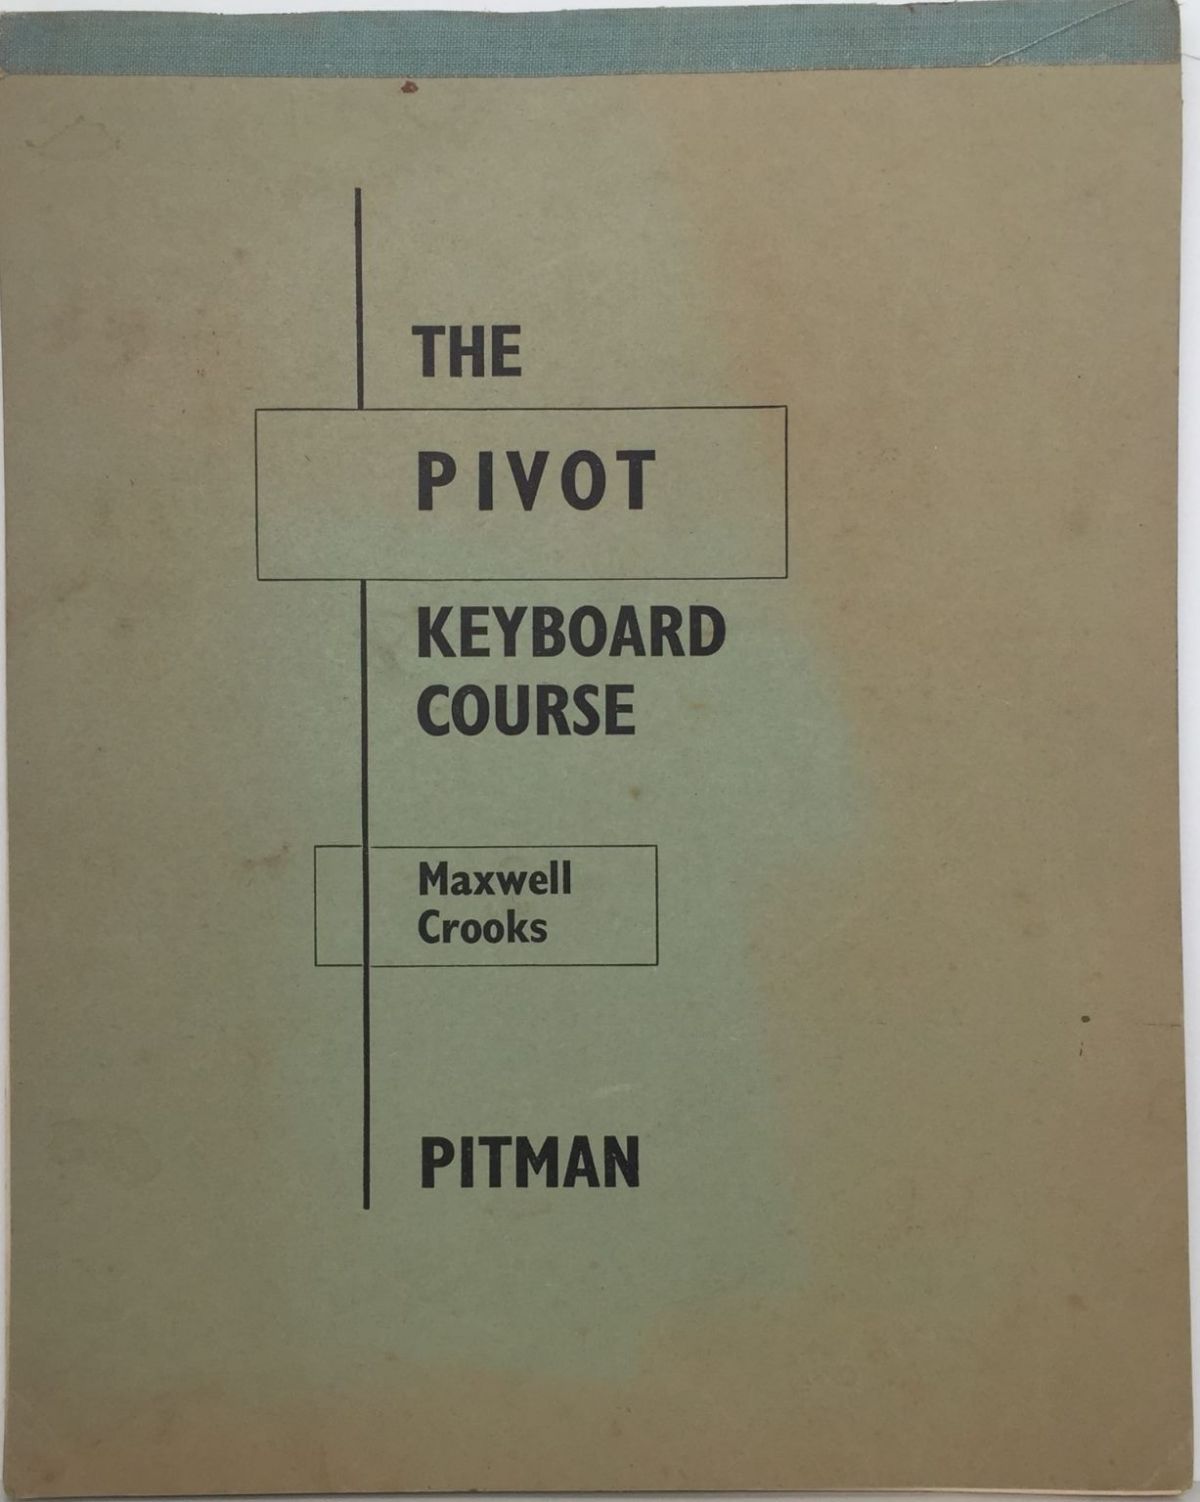 PITMAN: The Pivot Keyboard Course